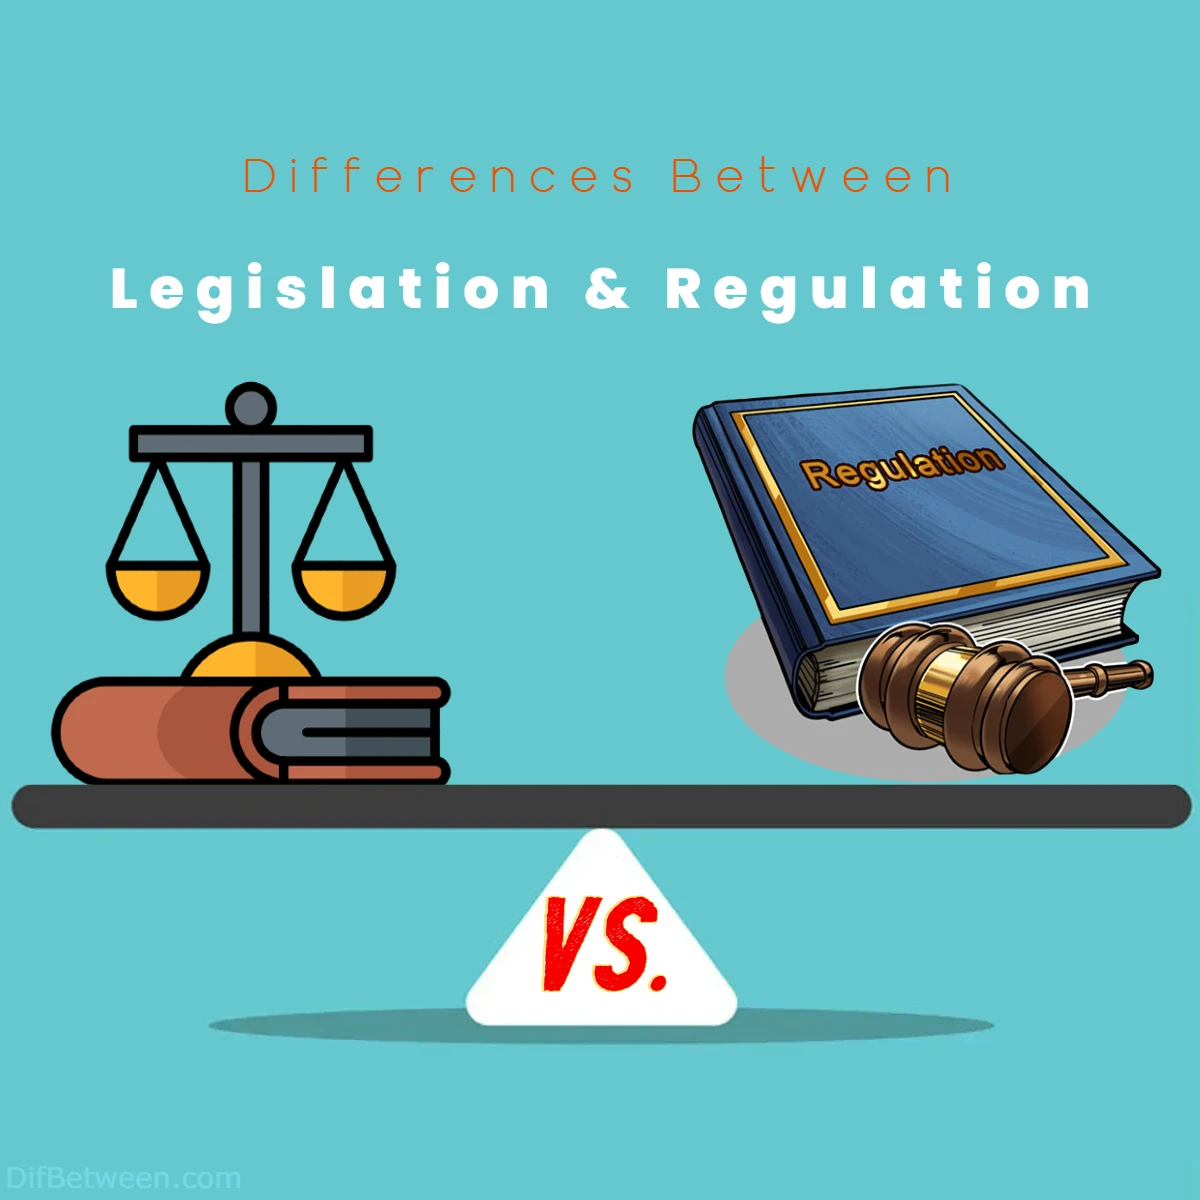 Differences Between Legislation vs Regulation